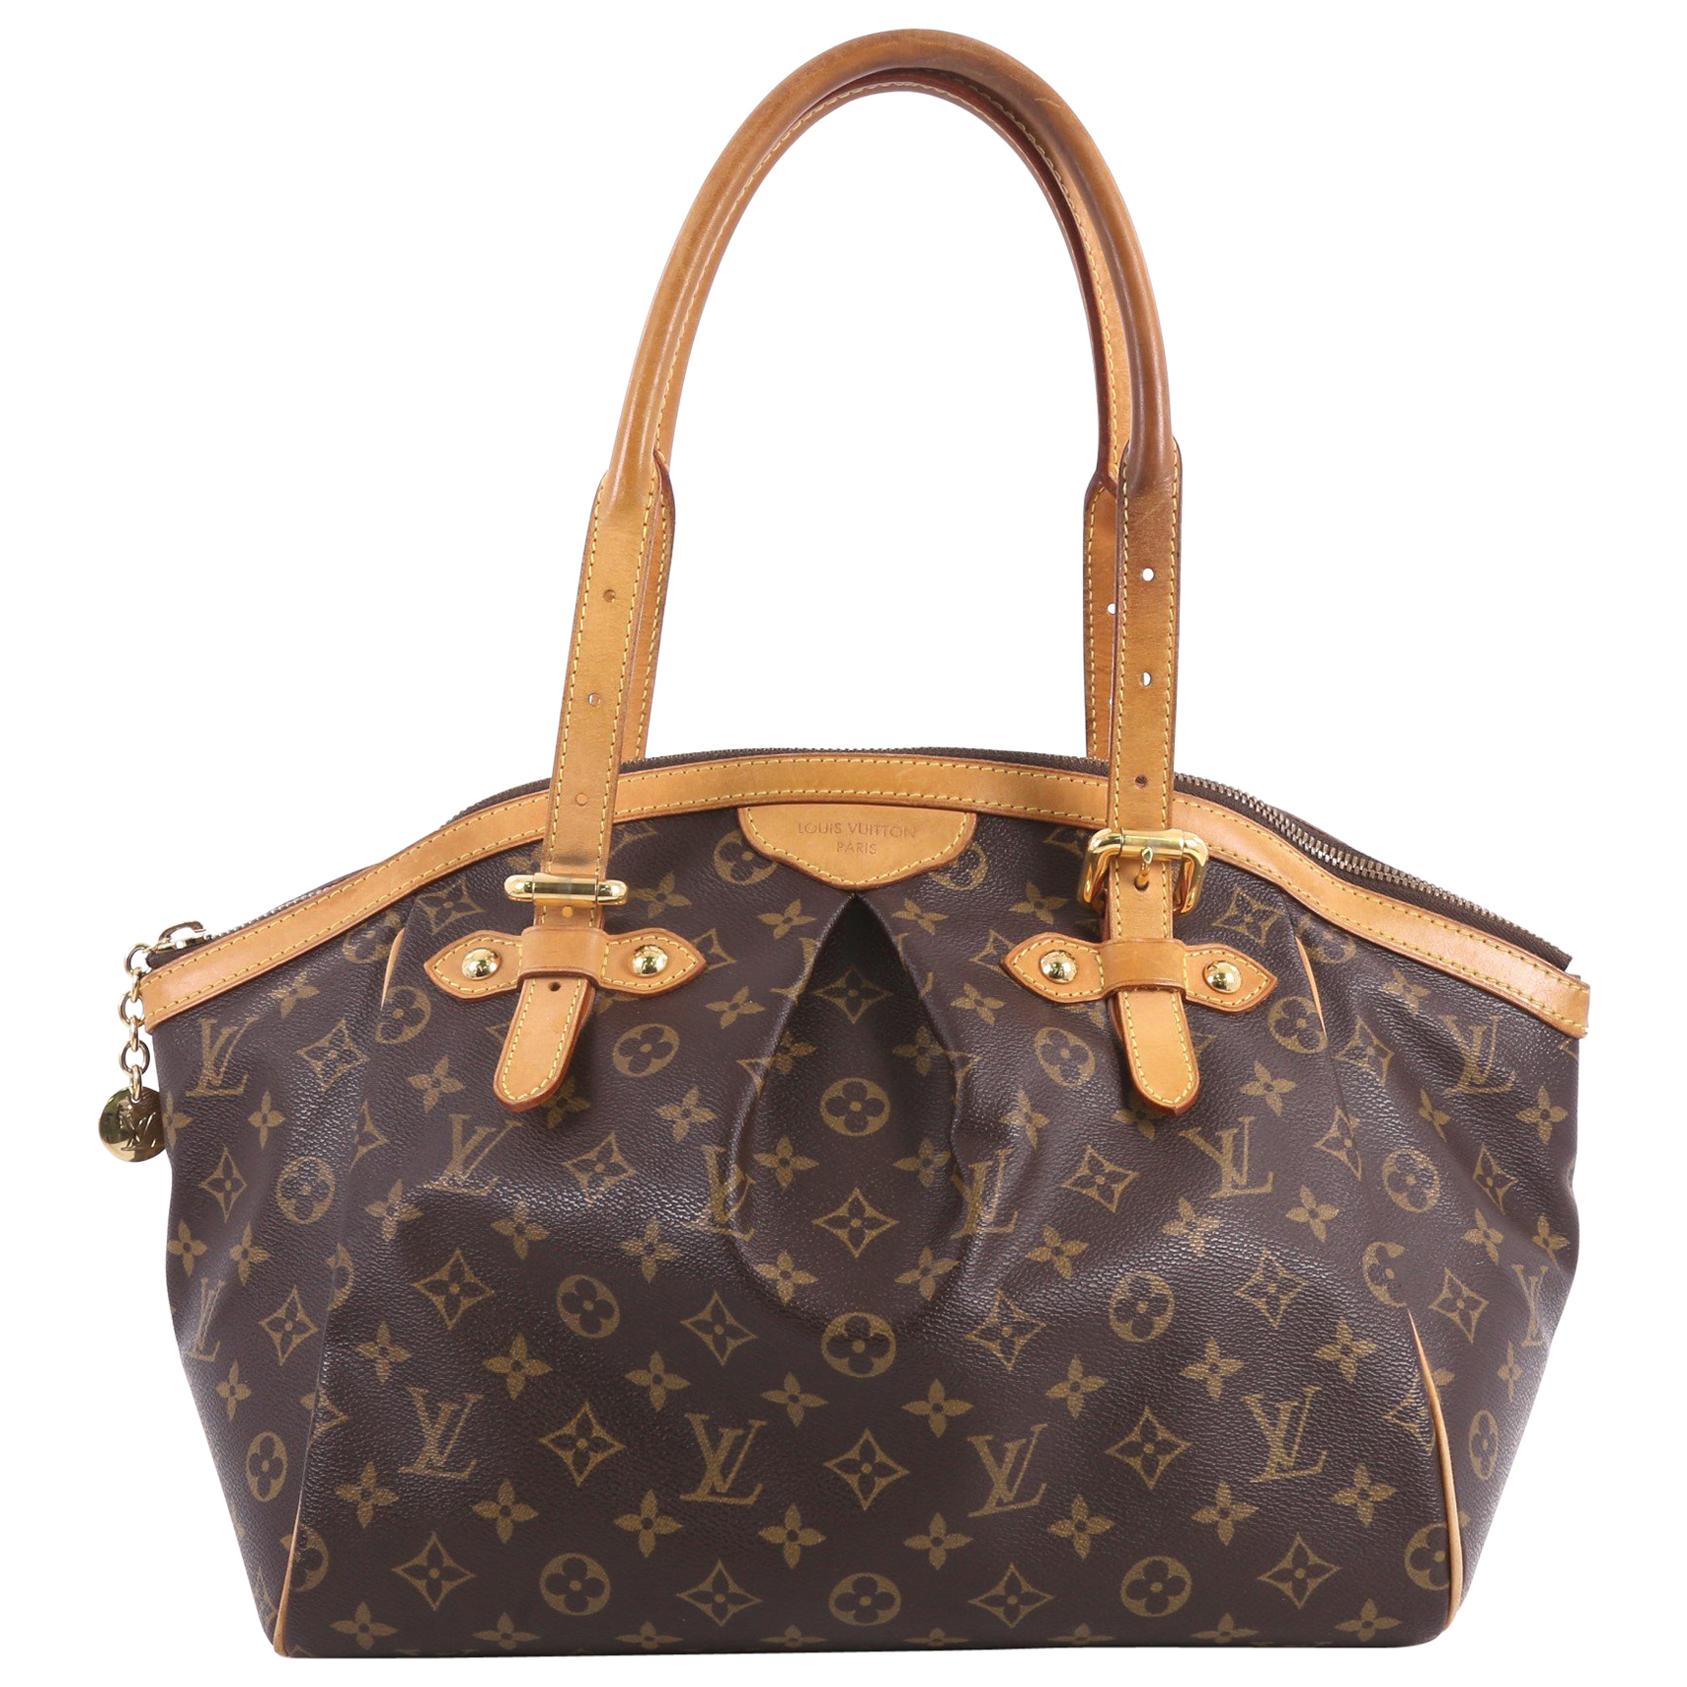 AUTHENTIC Louis Vuitton Runway Monogram Bag*** - household items - by owner  - housewares sale - craigslist